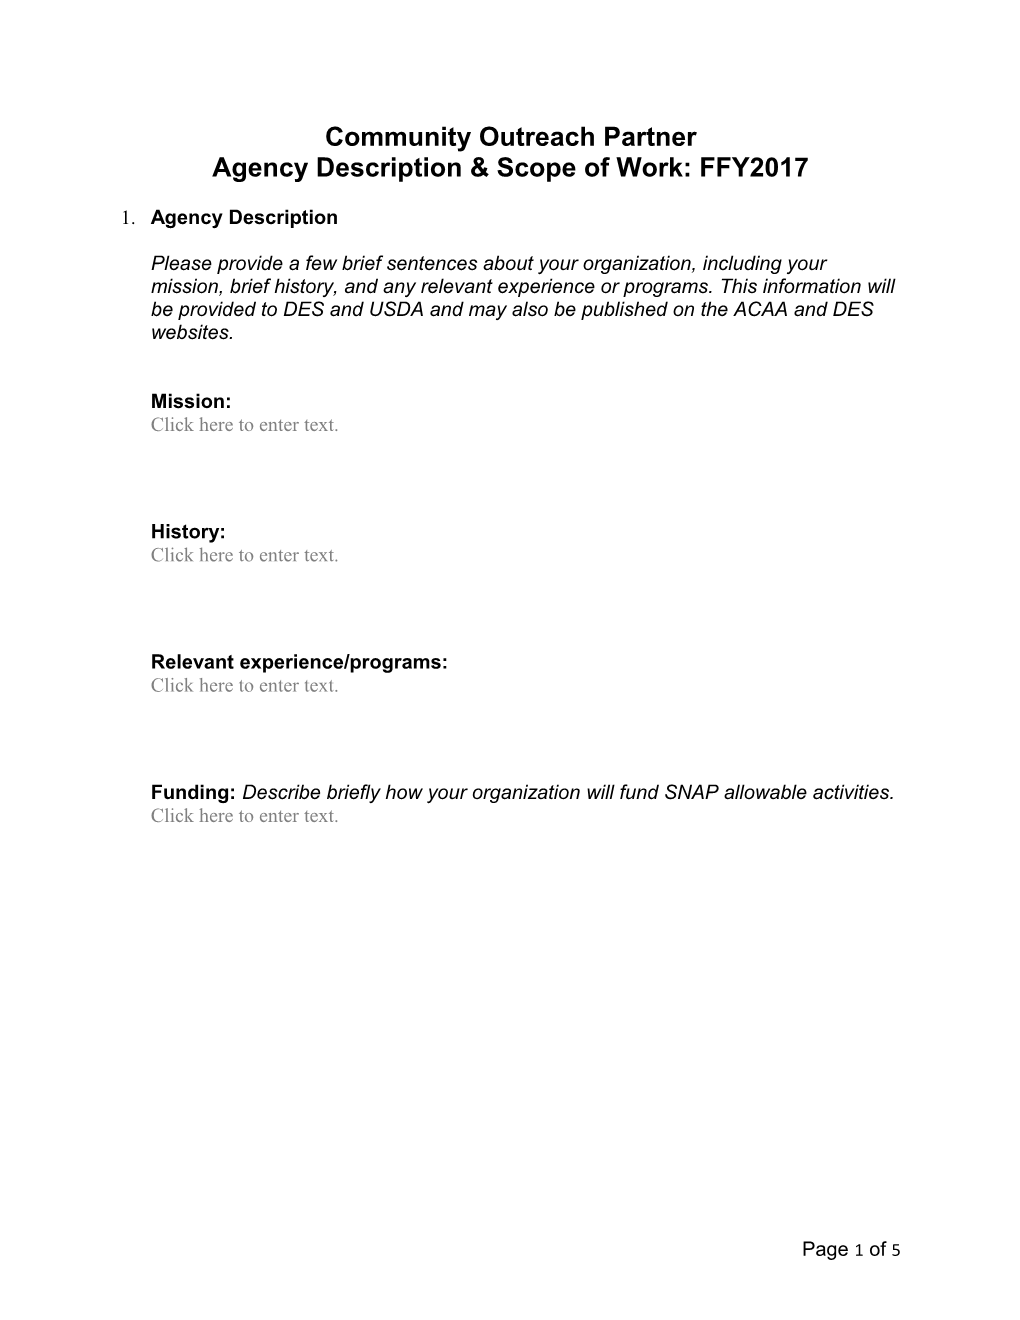 Community Outreach Partner Agency Description & Scope of Work: FFY2017